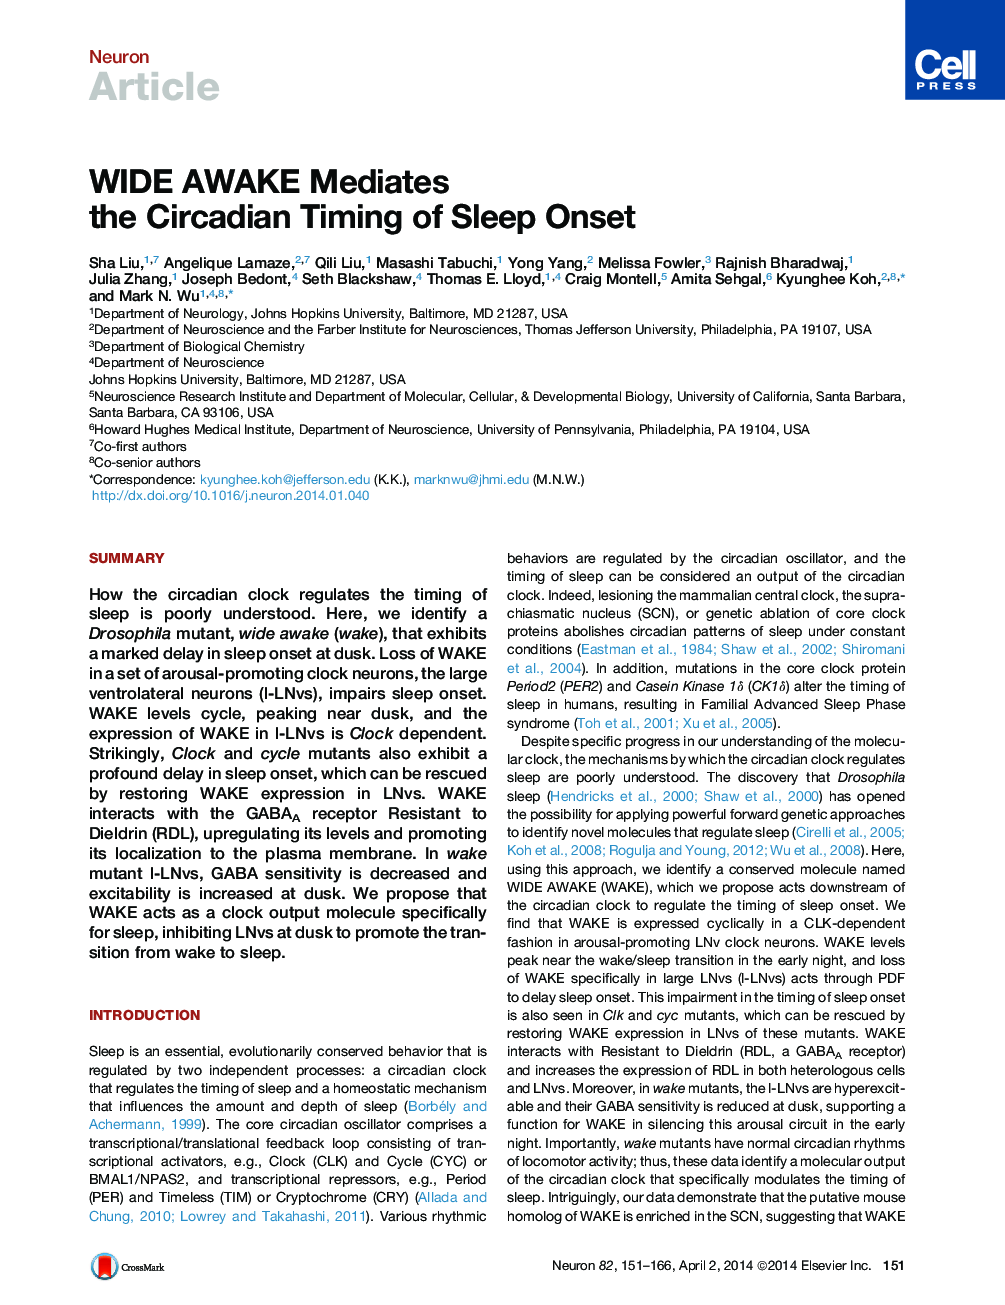 WIDE AWAKE Mediates the Circadian Timing of Sleep Onset